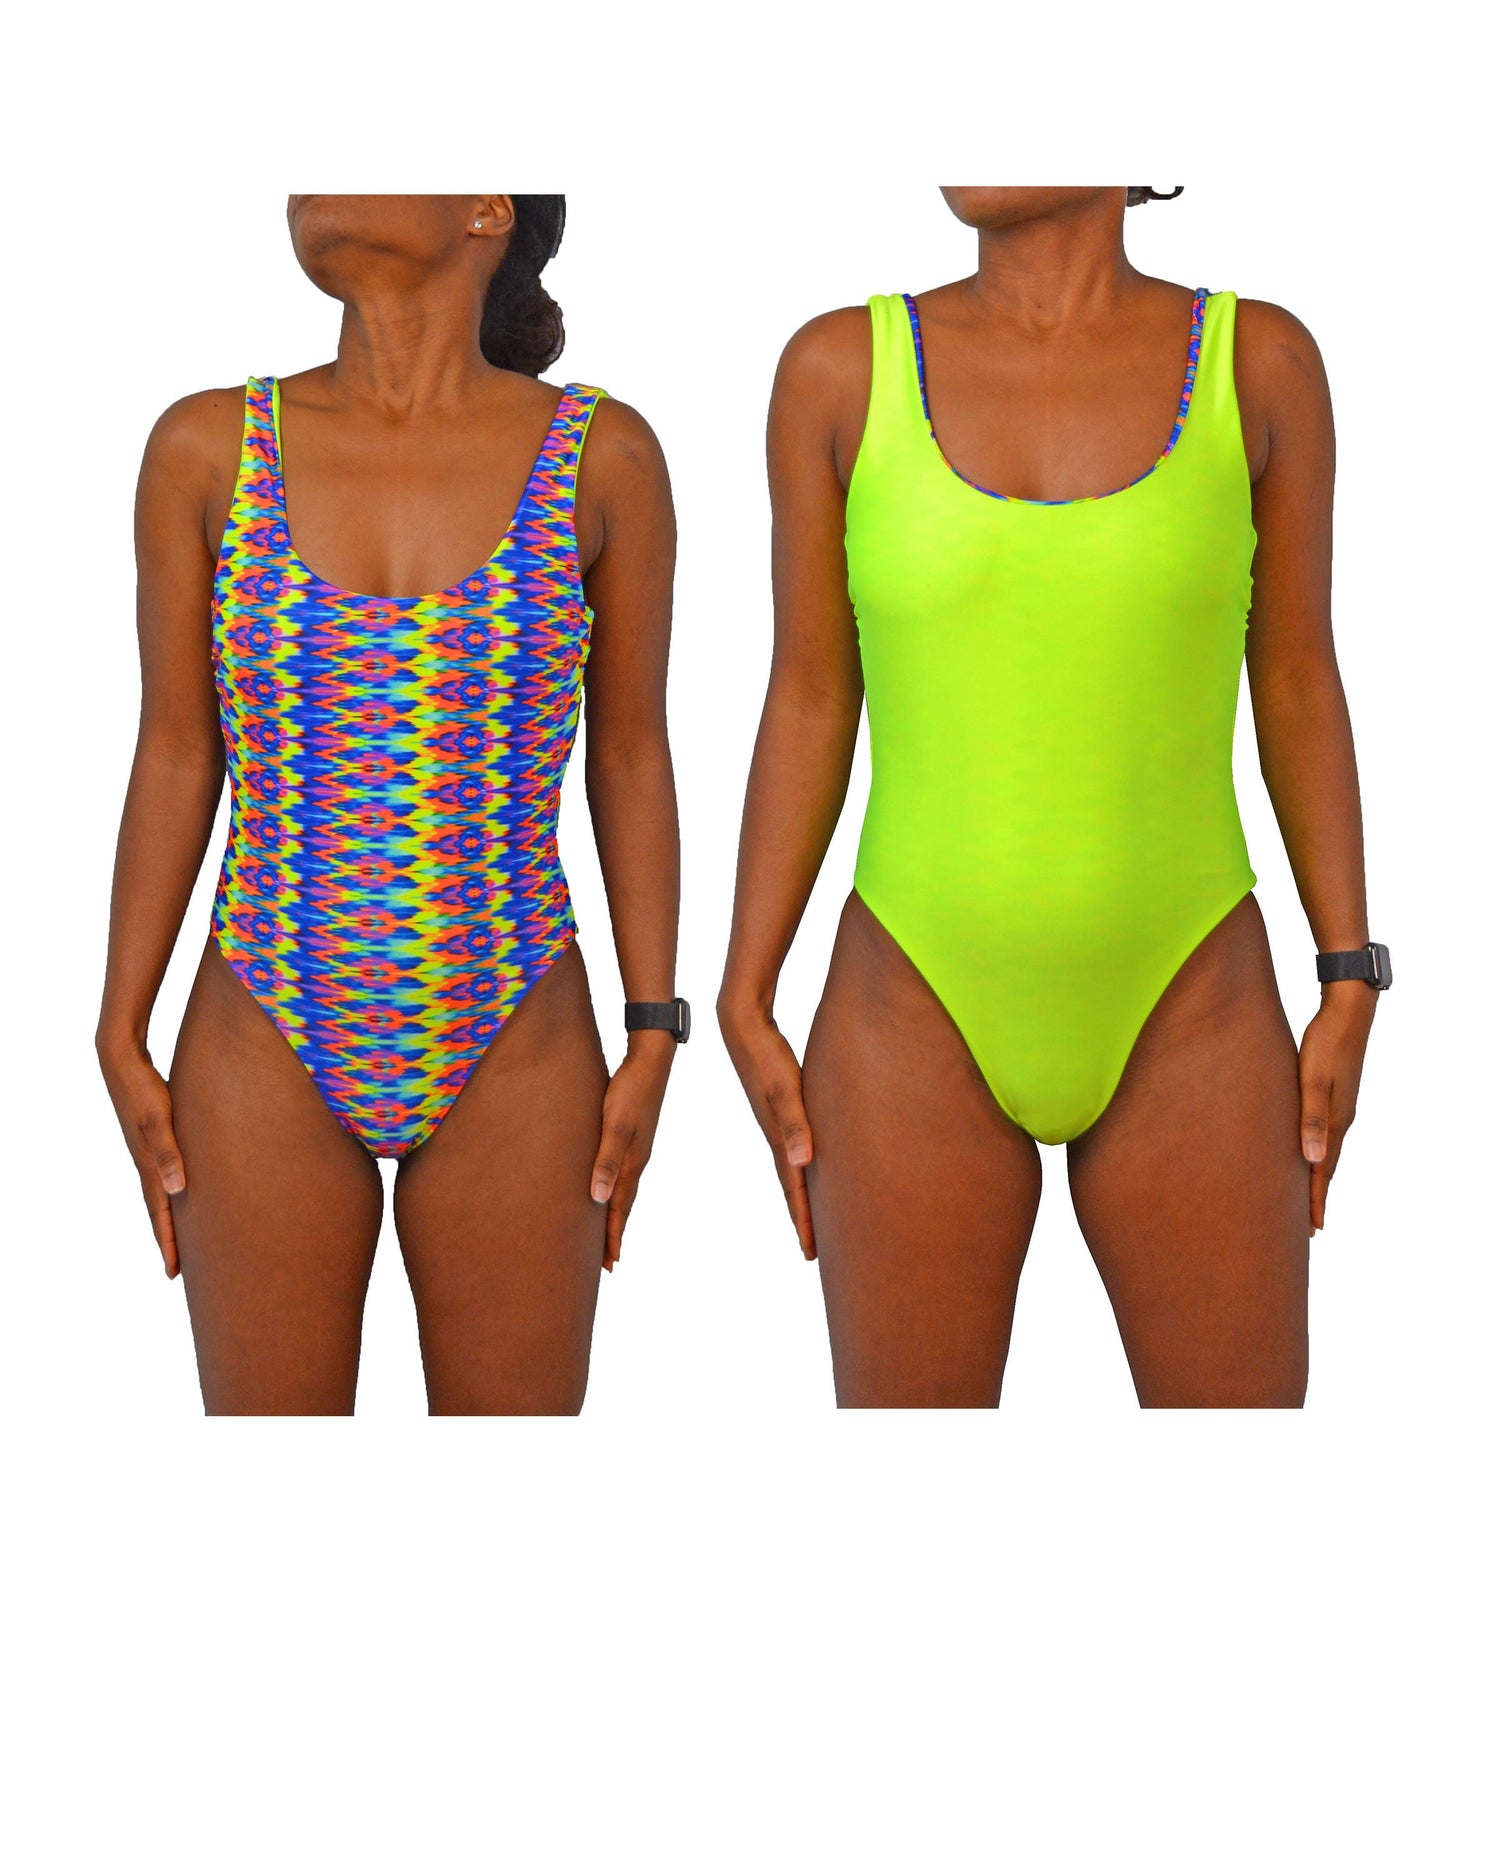 one piece swimsuit pattern pdf free, free one piece swimsuit sewing pattern, how to make one piece swimsuit, free swimsuit sewing patterns, free sewing patterns pdf